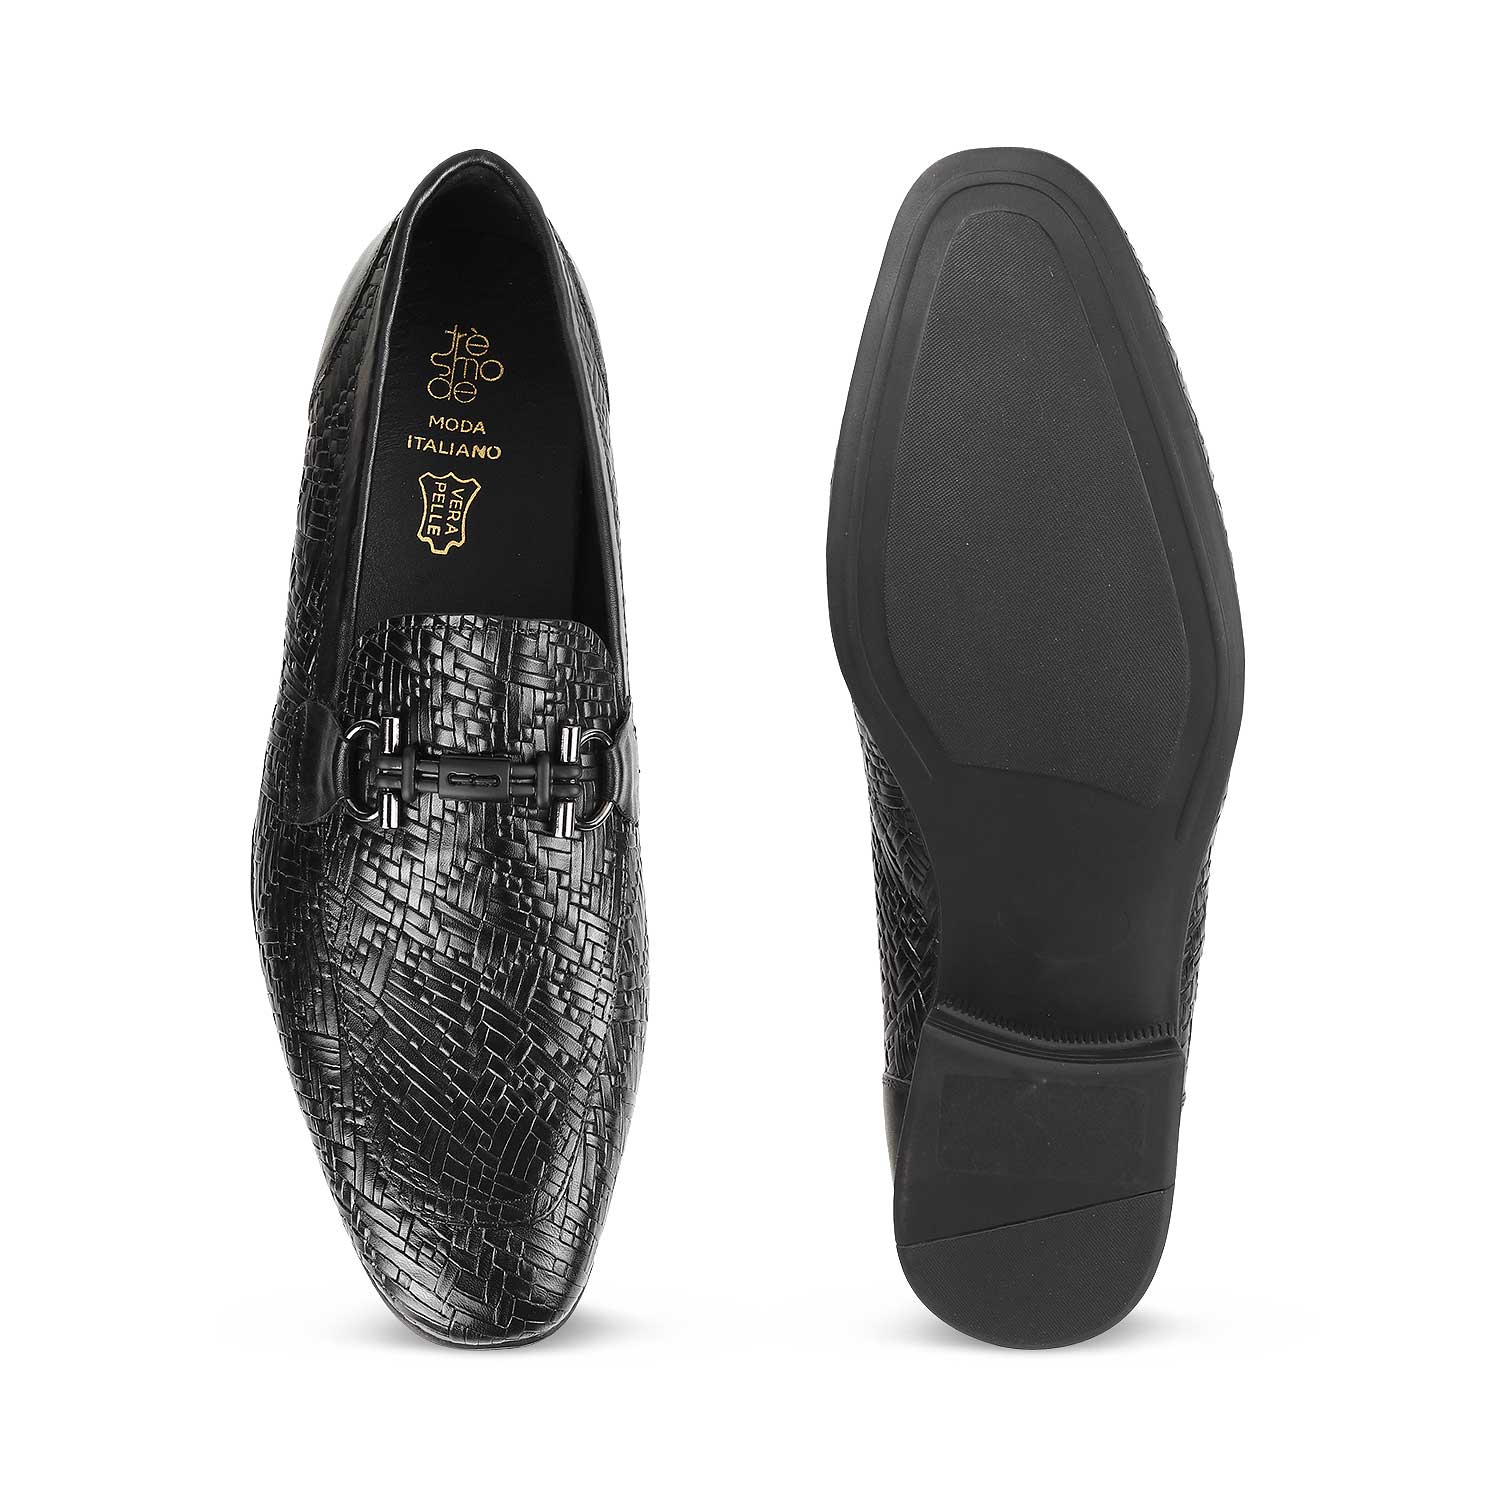 Crint Black Men's Leather Loafers Online at Tresmode.com